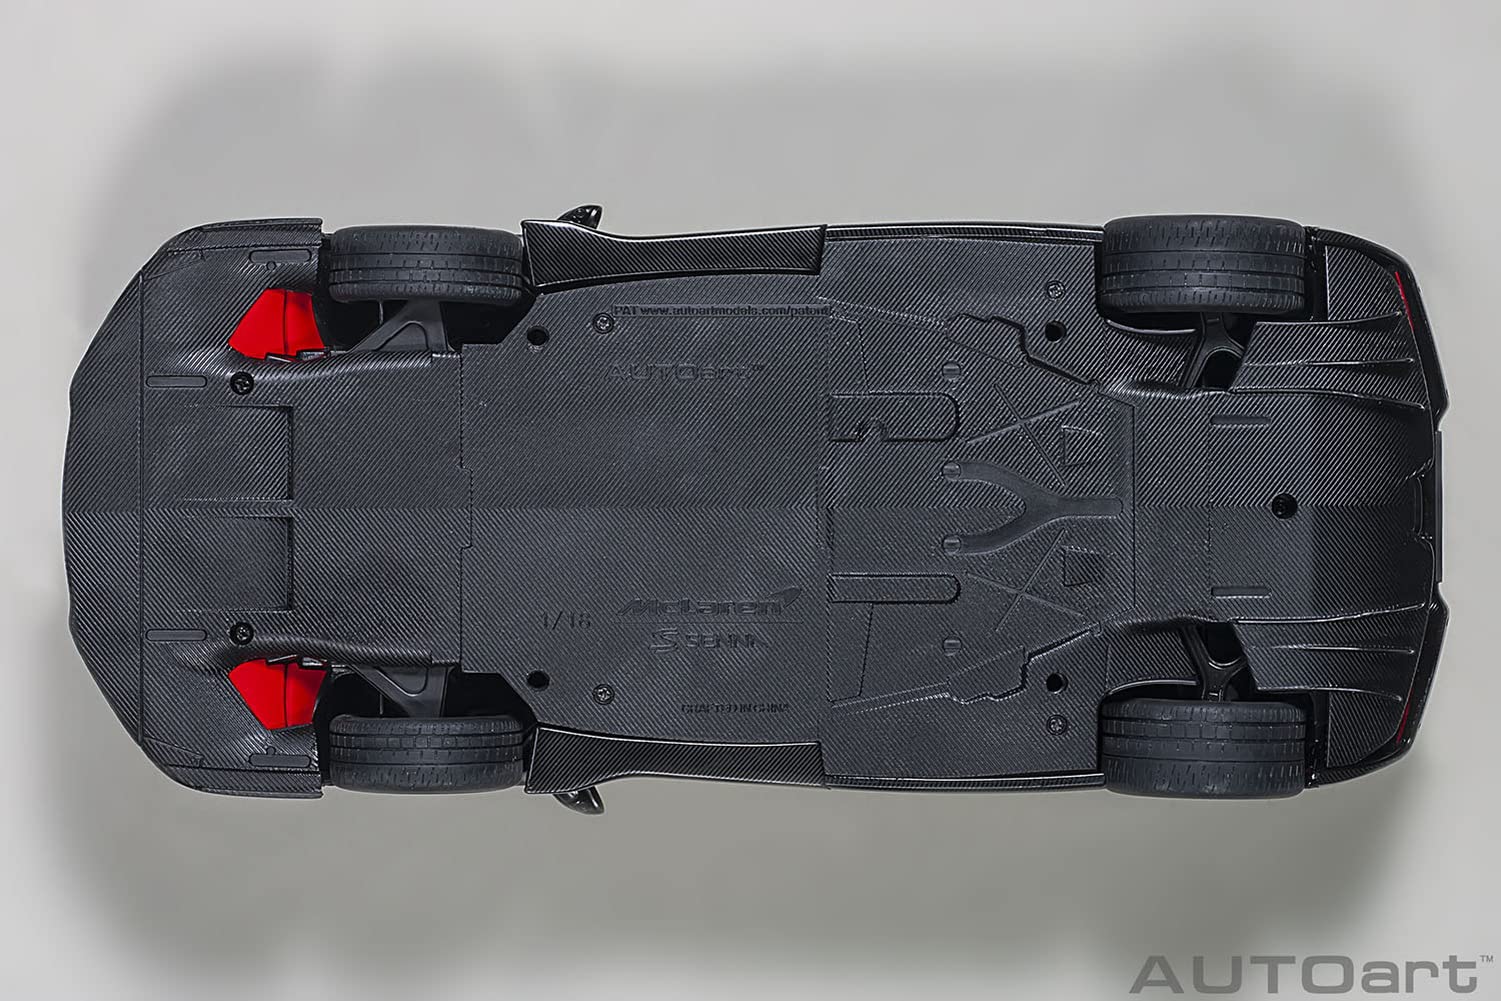 AUTOart 1/18 McLaren Senna Black Finished Product 76076 Composite Diecast Car